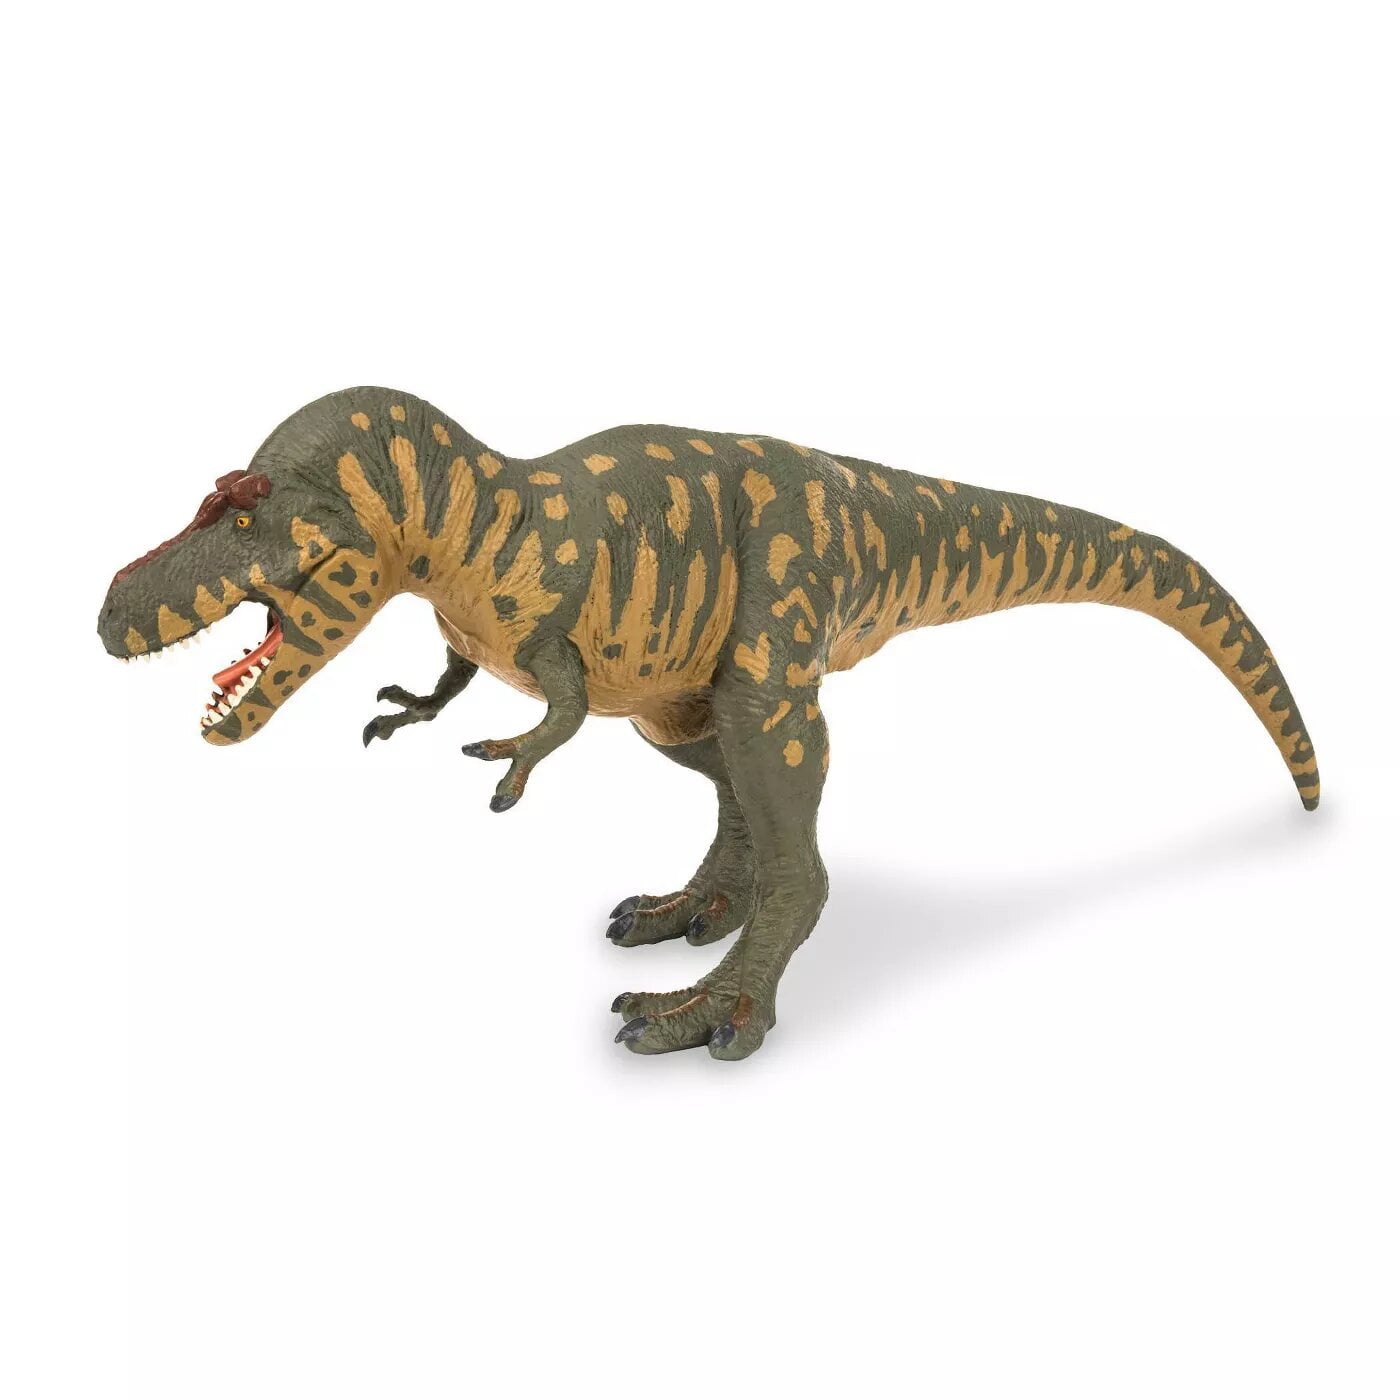 Dinosaur toy figure Terra Tyrannosaurus Rex Dan LoRusso Collection by Barrat 